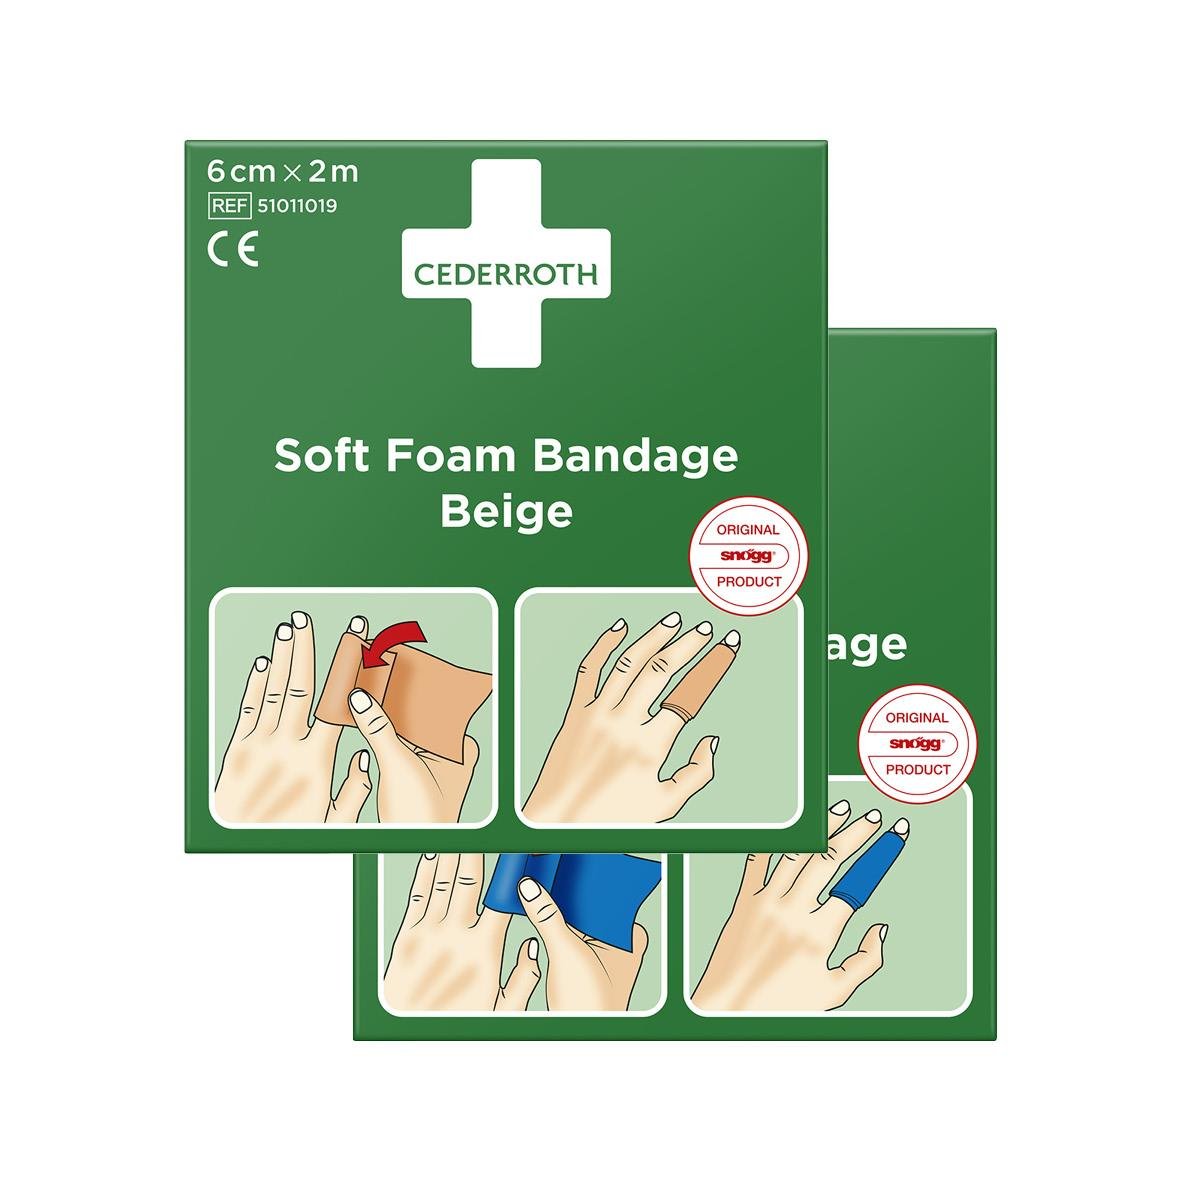 Soft Foam Bandage Cederroth 6cmx2m